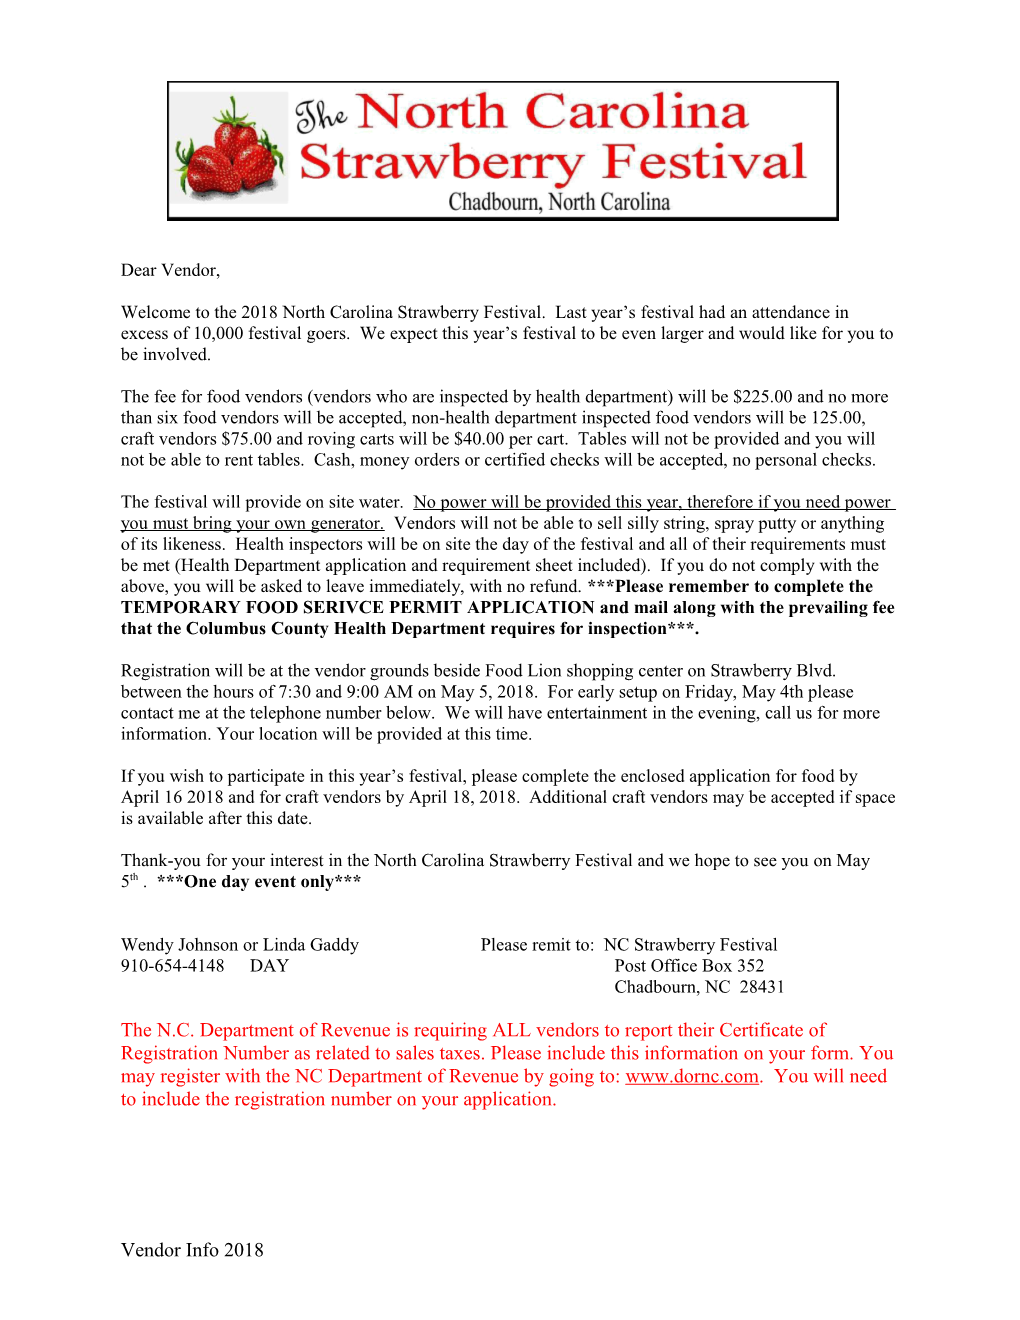 The North Carolina Strawberry Festival